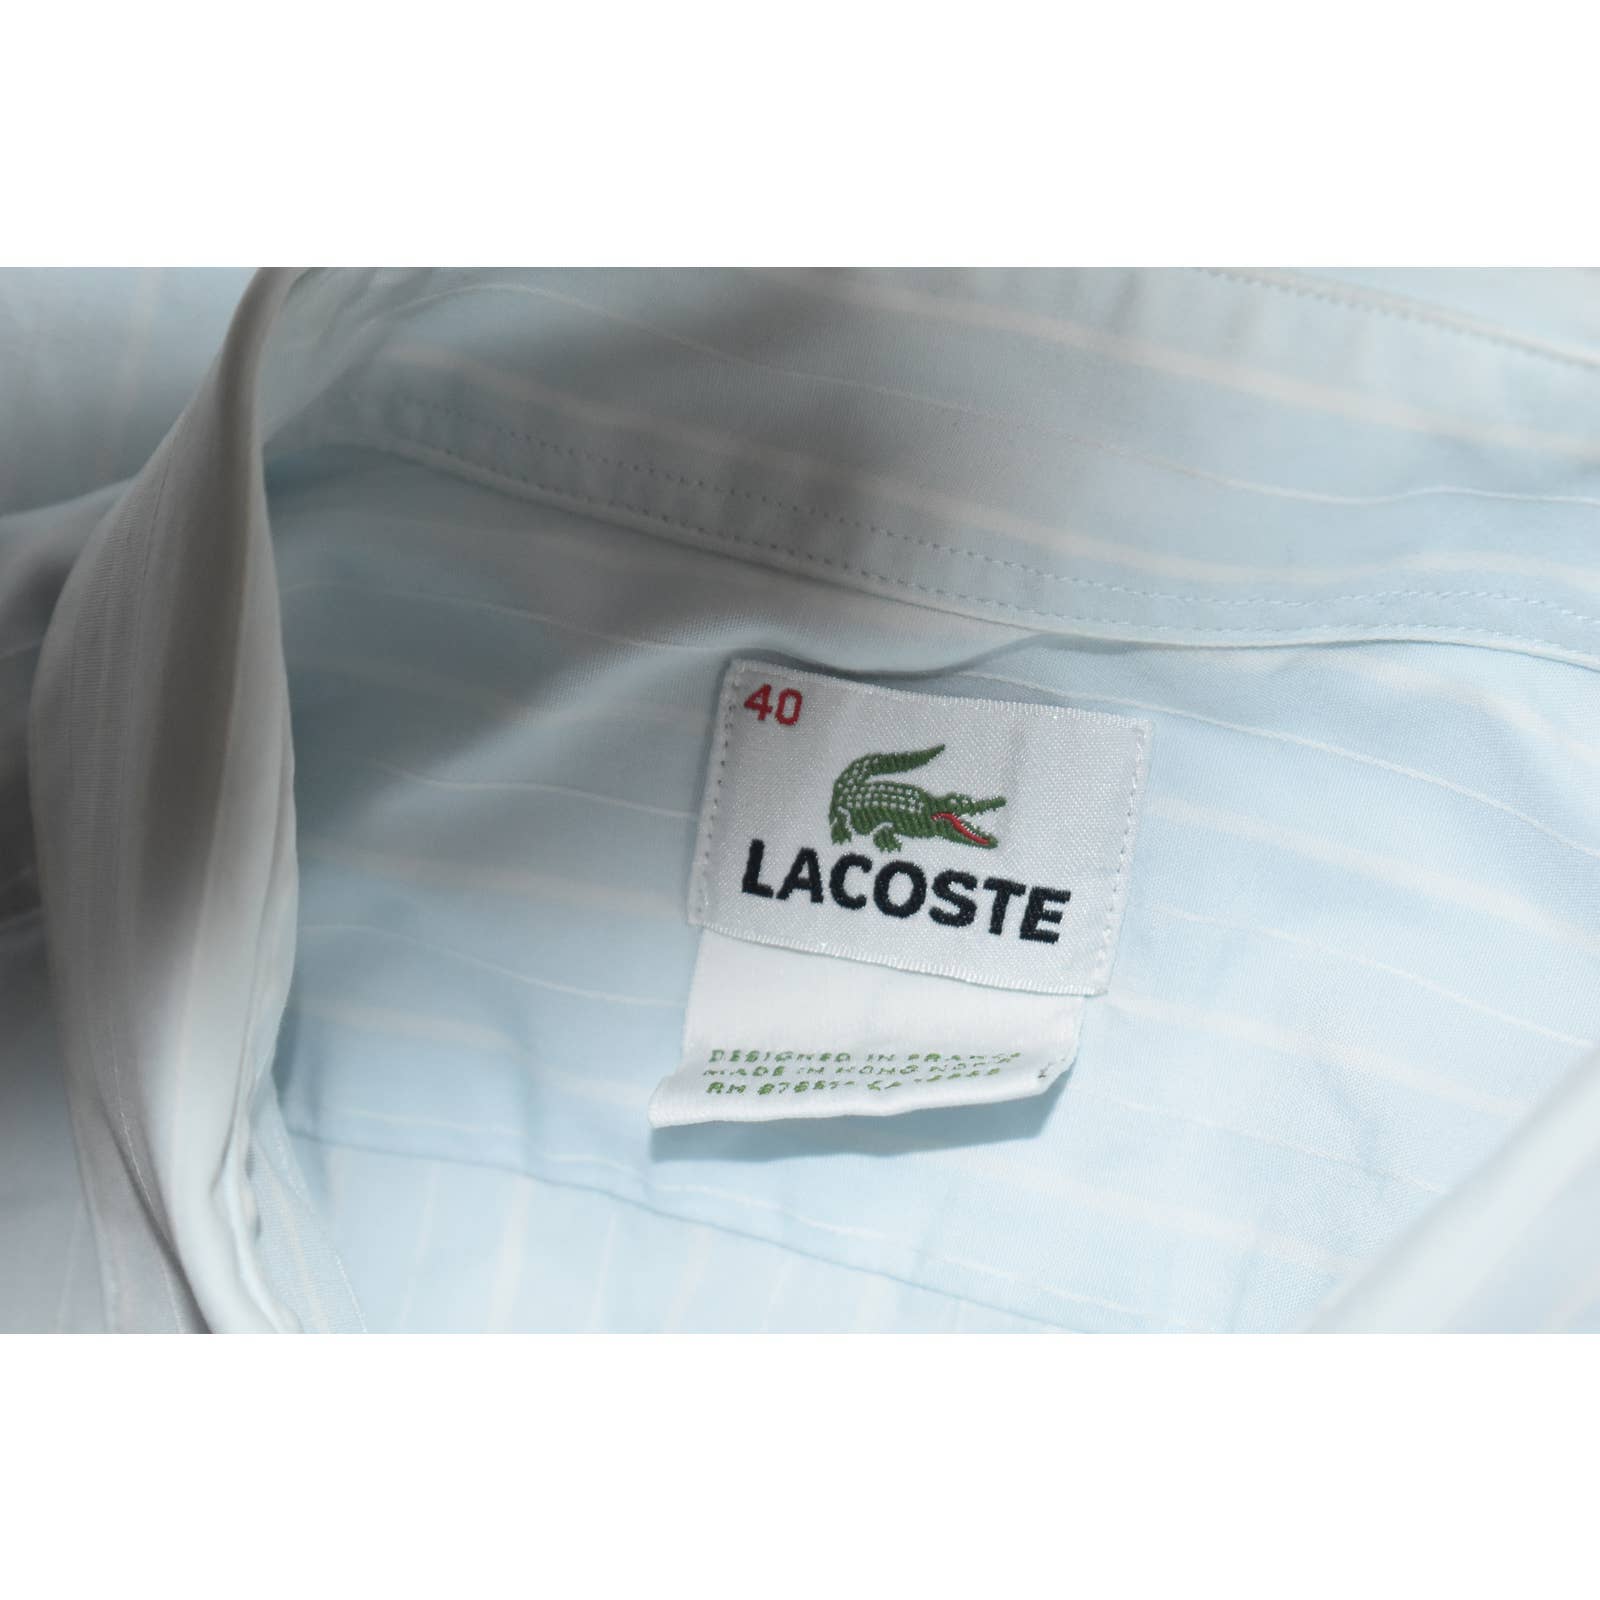 Lacoste Blue White Striped Button Down Shirt - 40 M